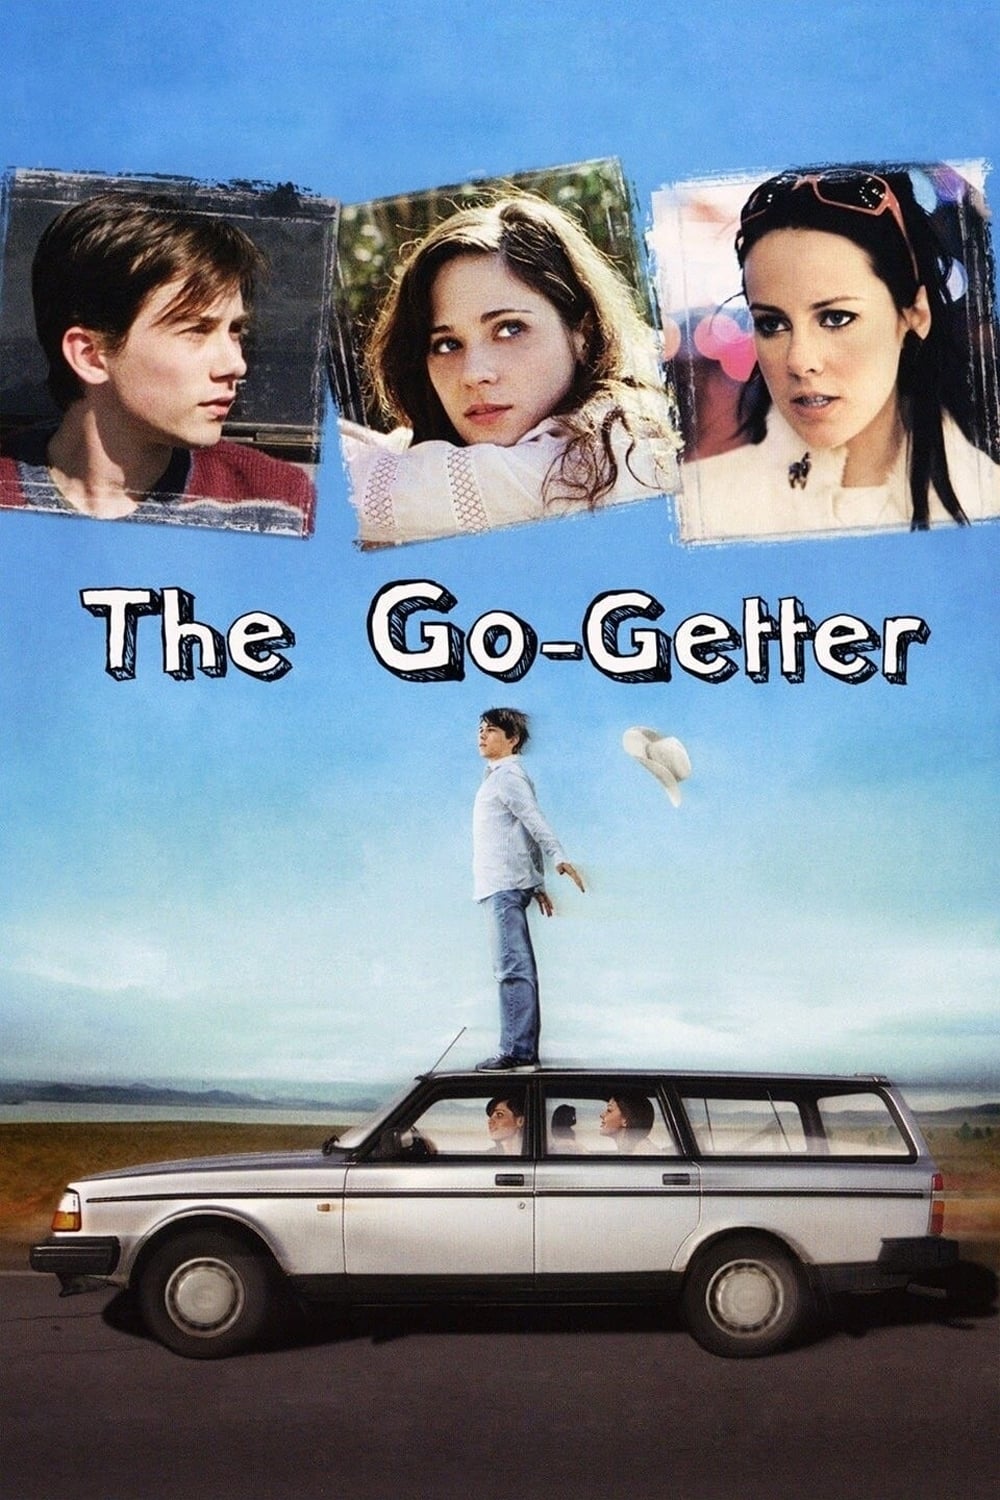 Download The Go-Getter 2007 torrent full movie HD FlixTV